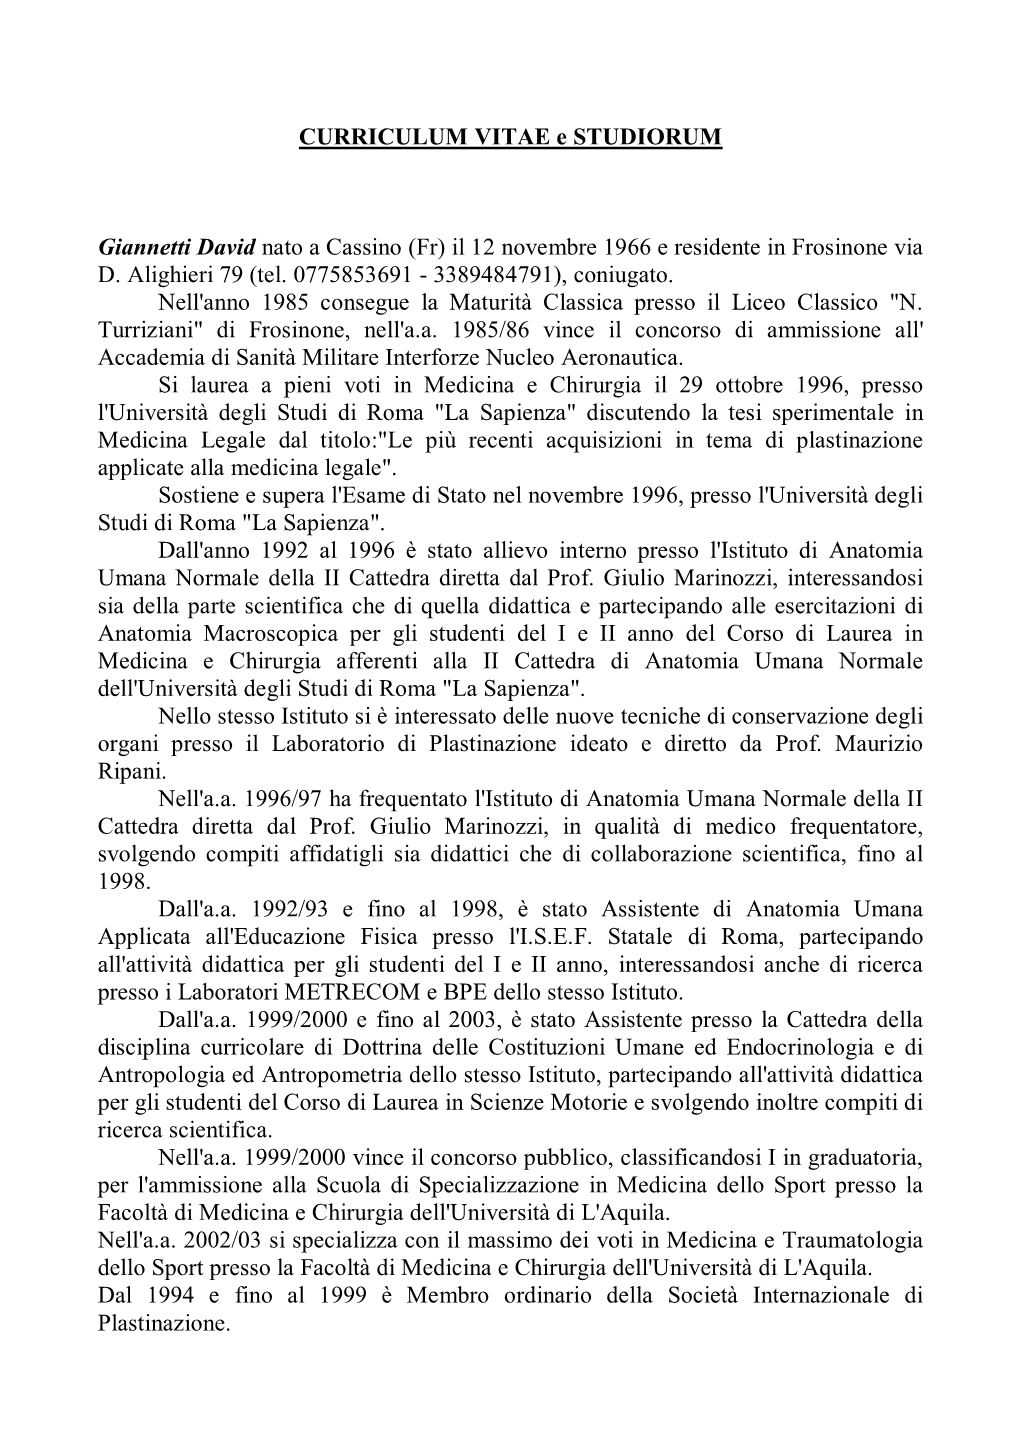 CURRICULUM VITAE E STUDIORUM Giannetti David Nato a Cassino (Fr